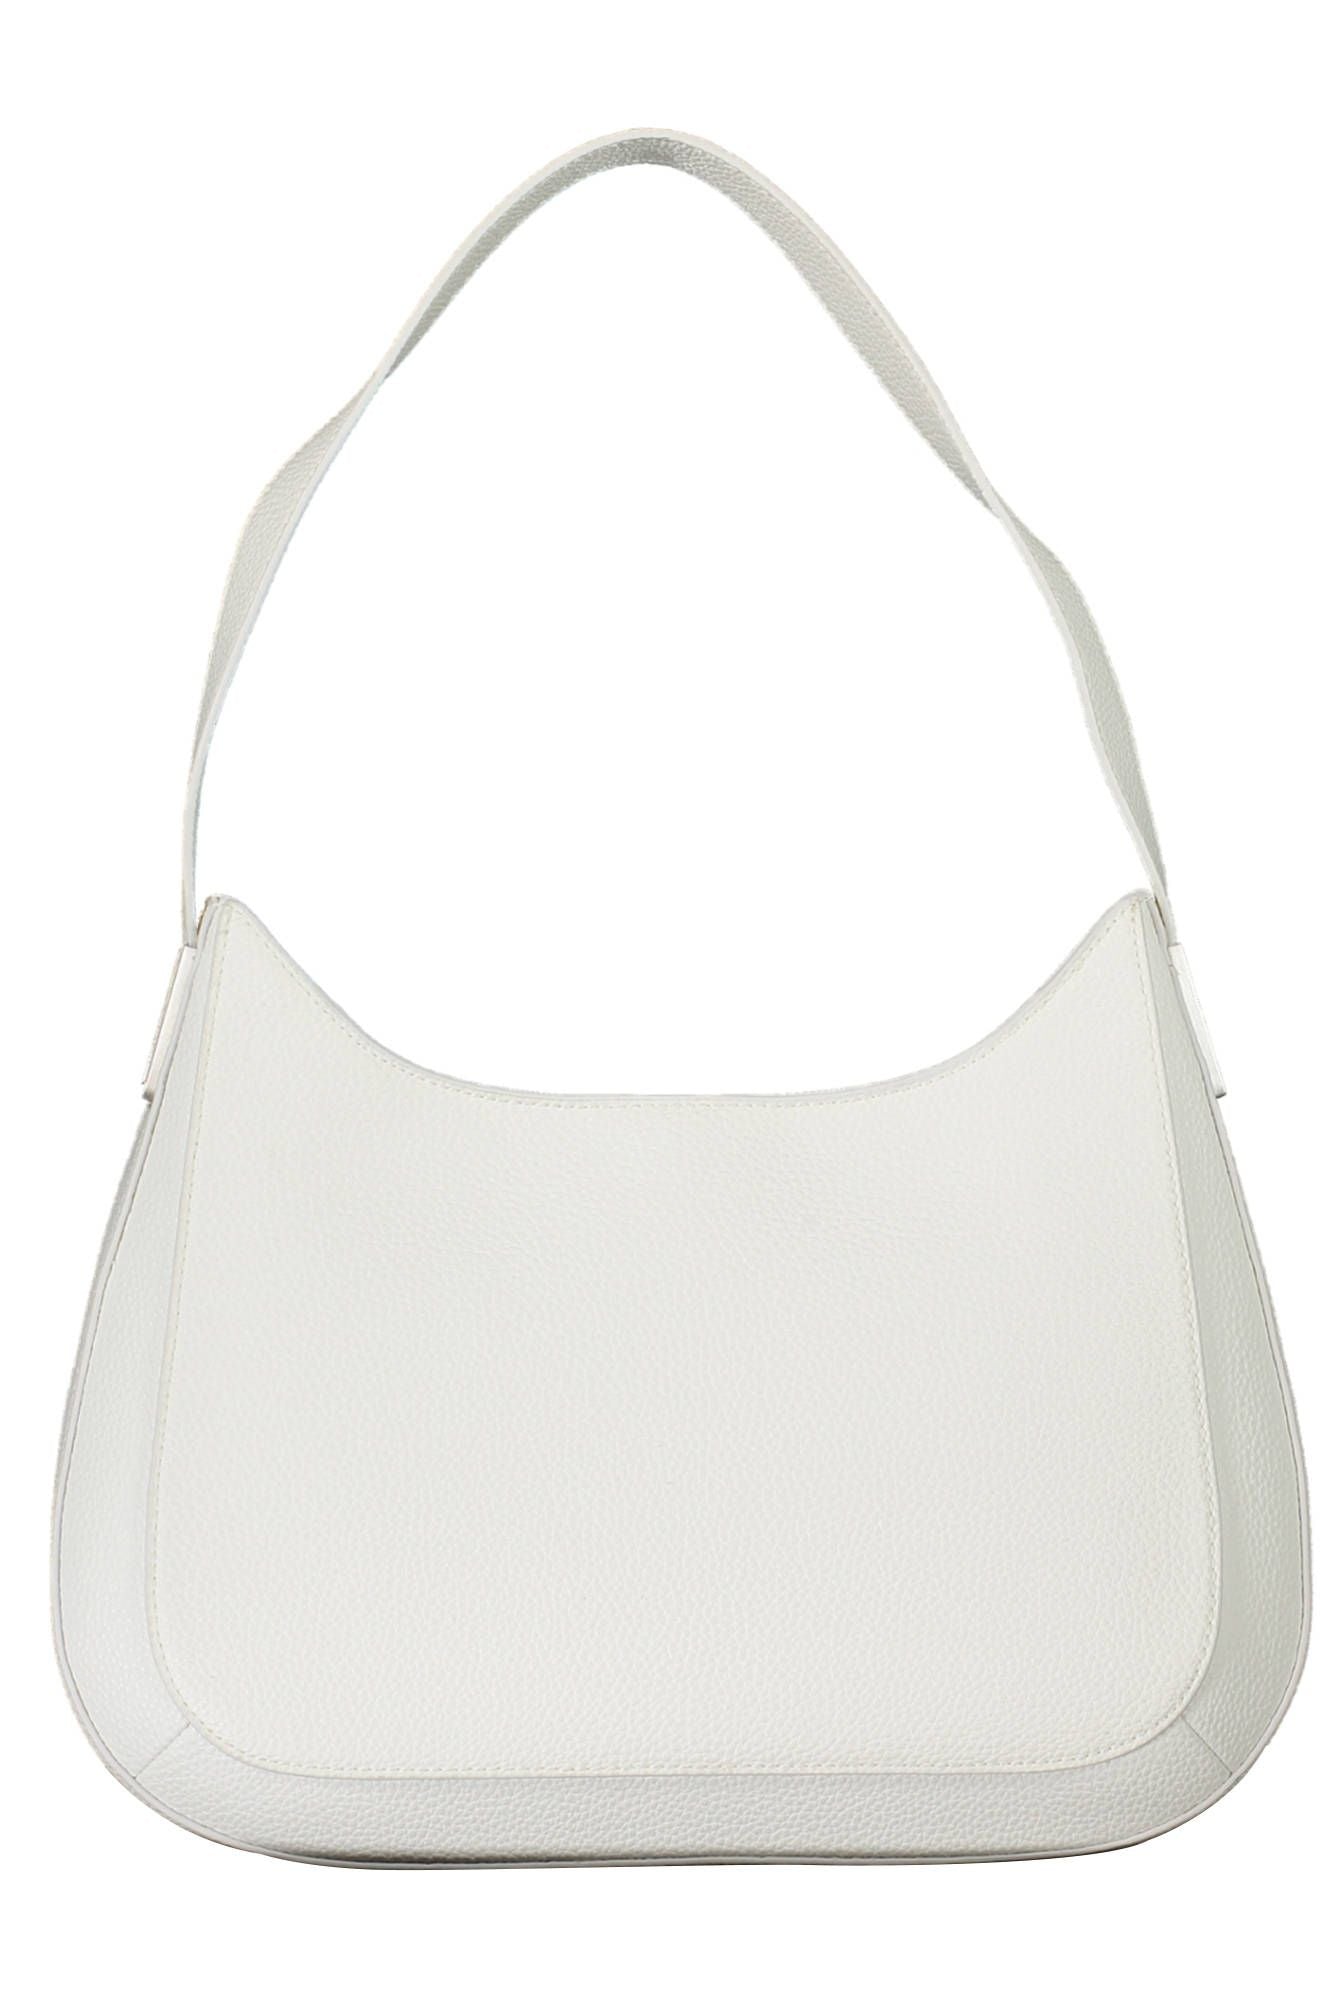 Chic White Shoulder Bag with Contrasting Details